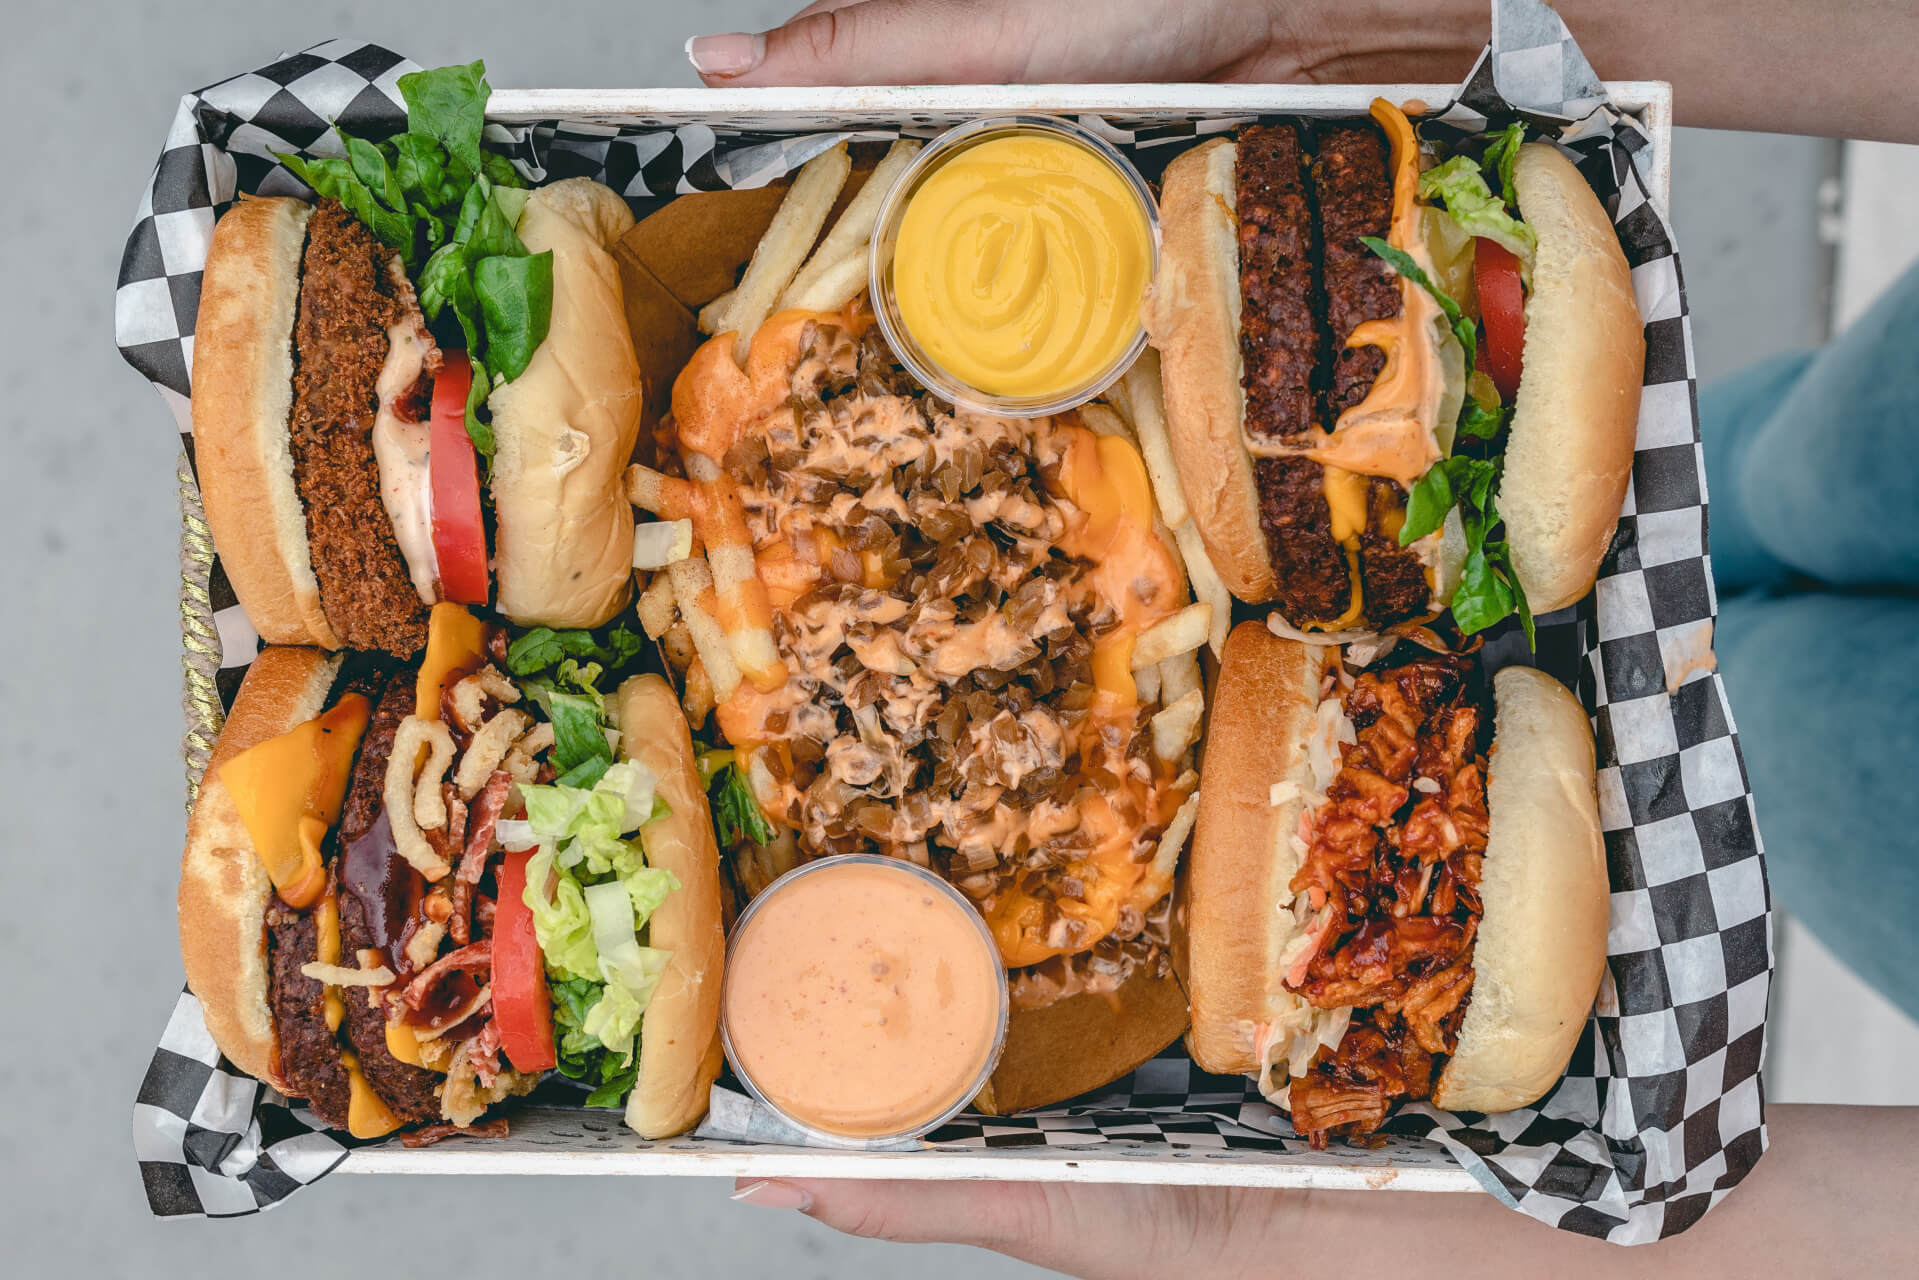 vegan burgers on a tray